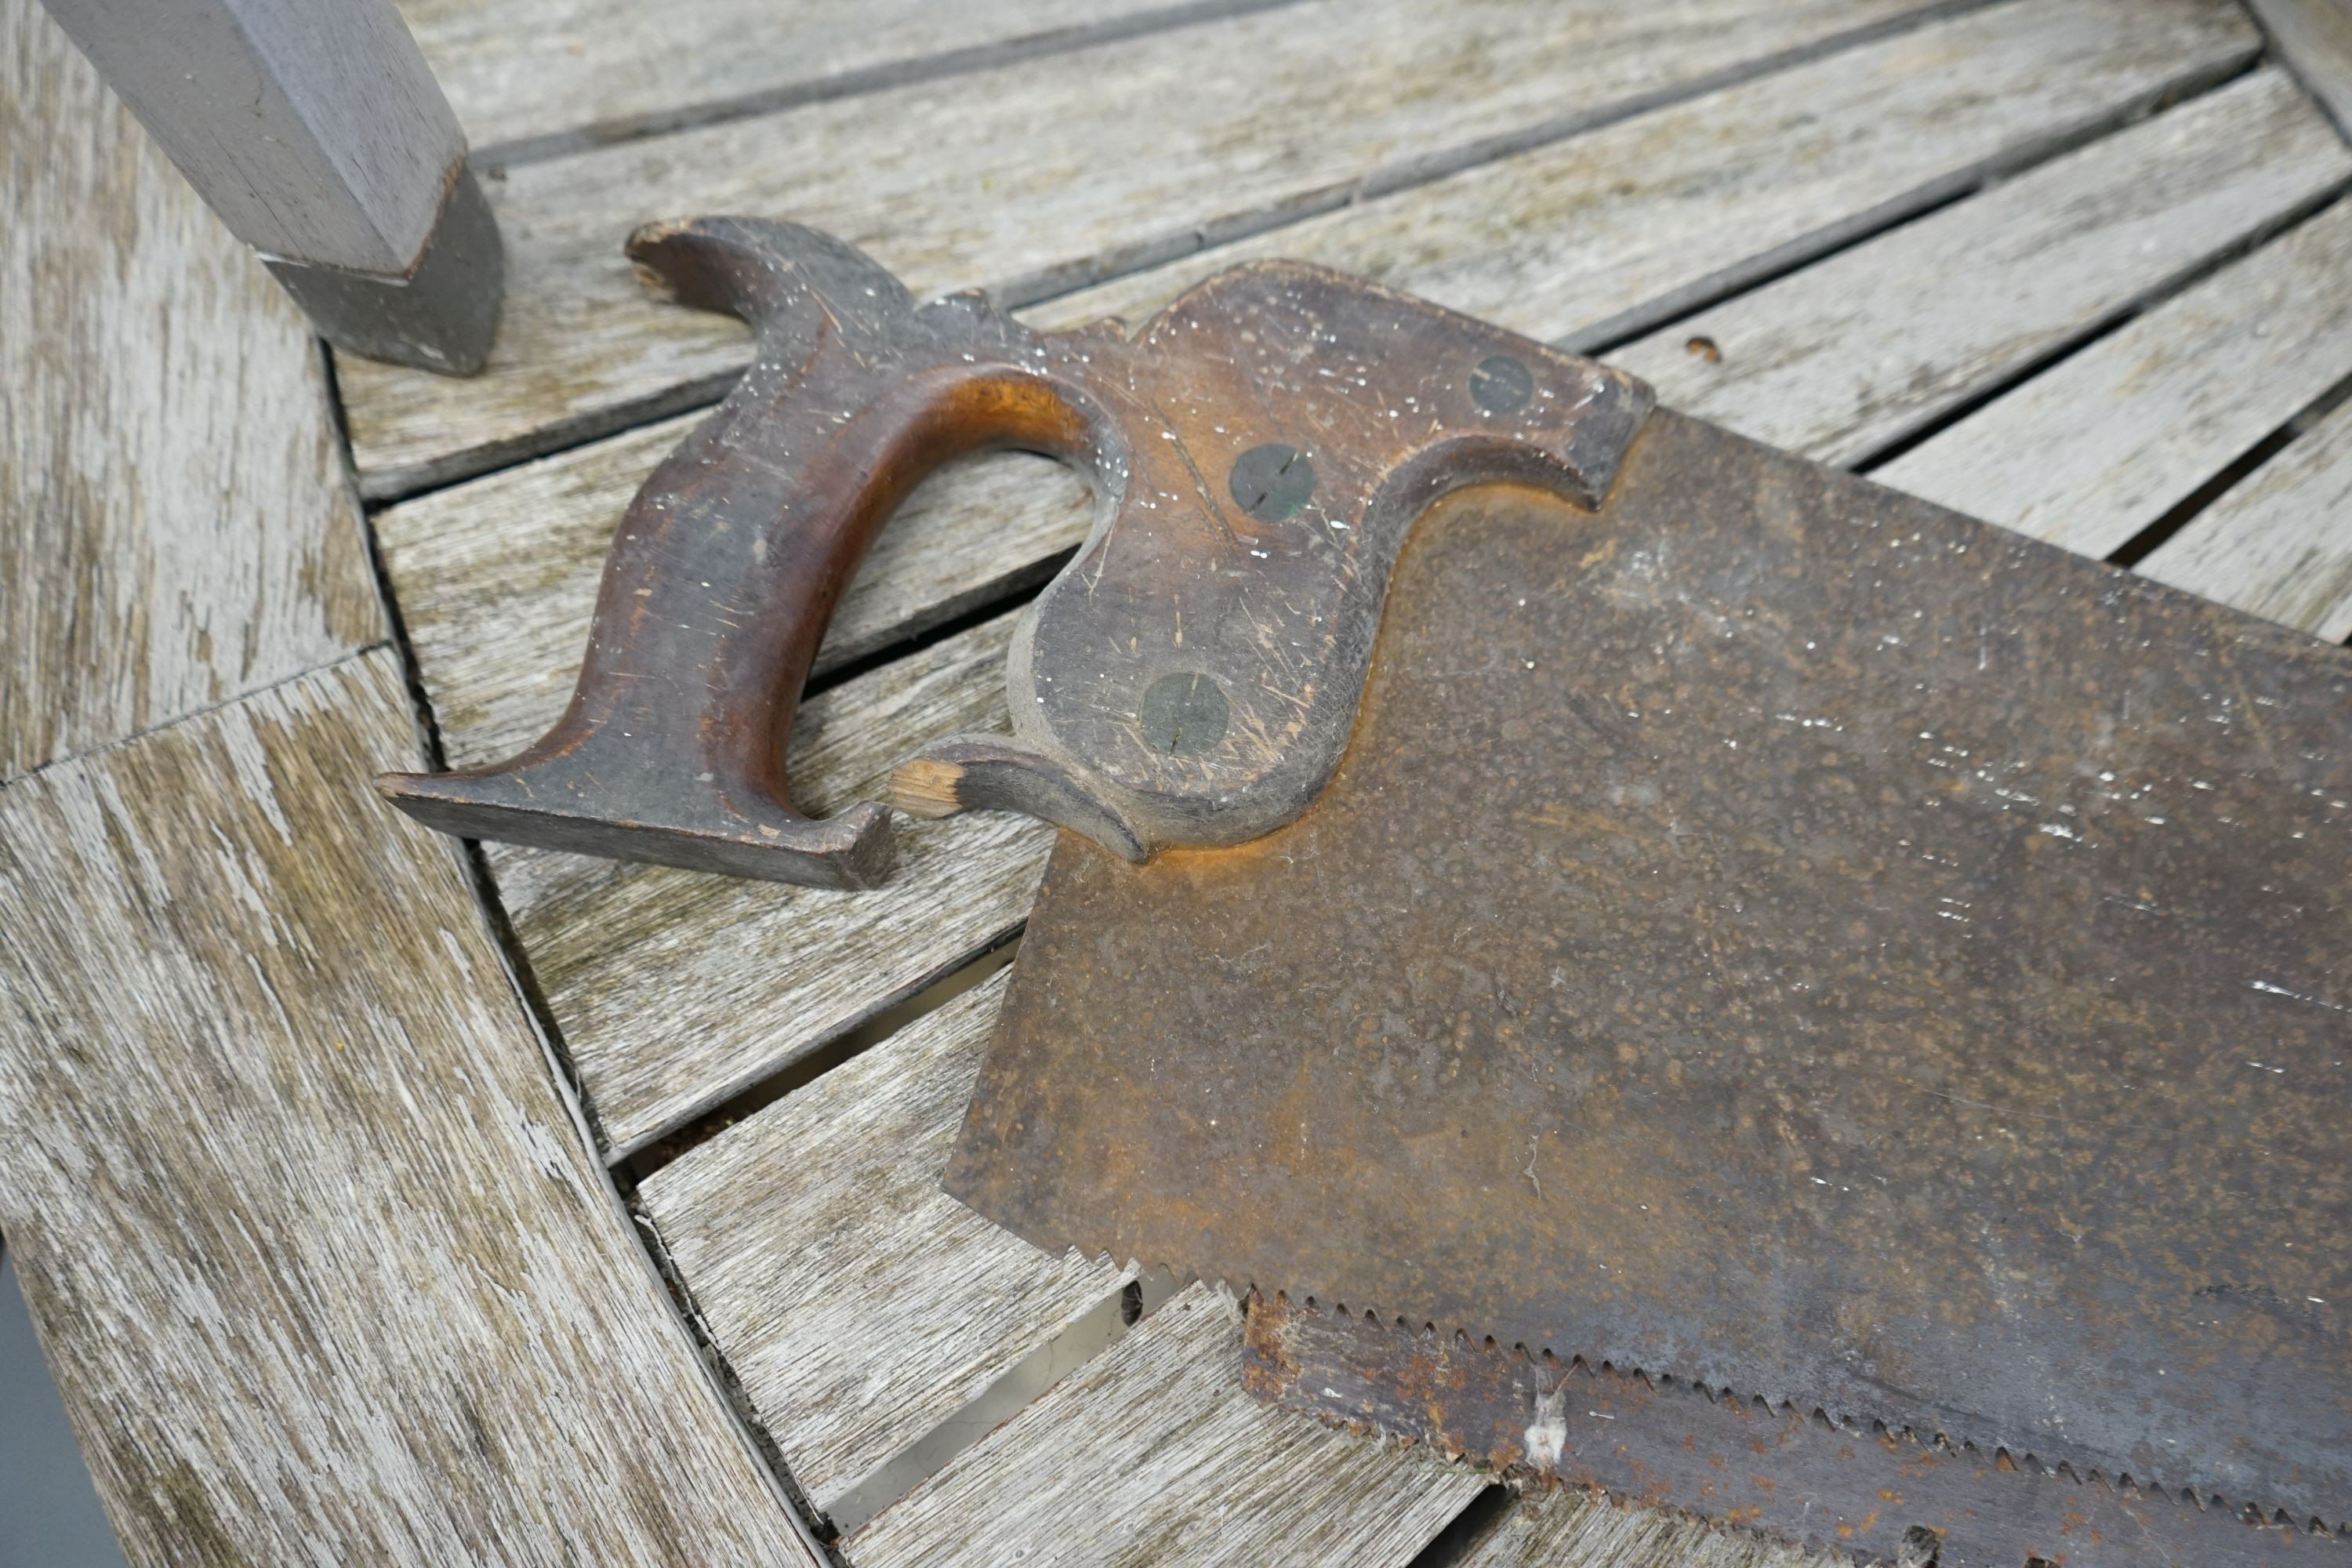 Three vintage hand saws